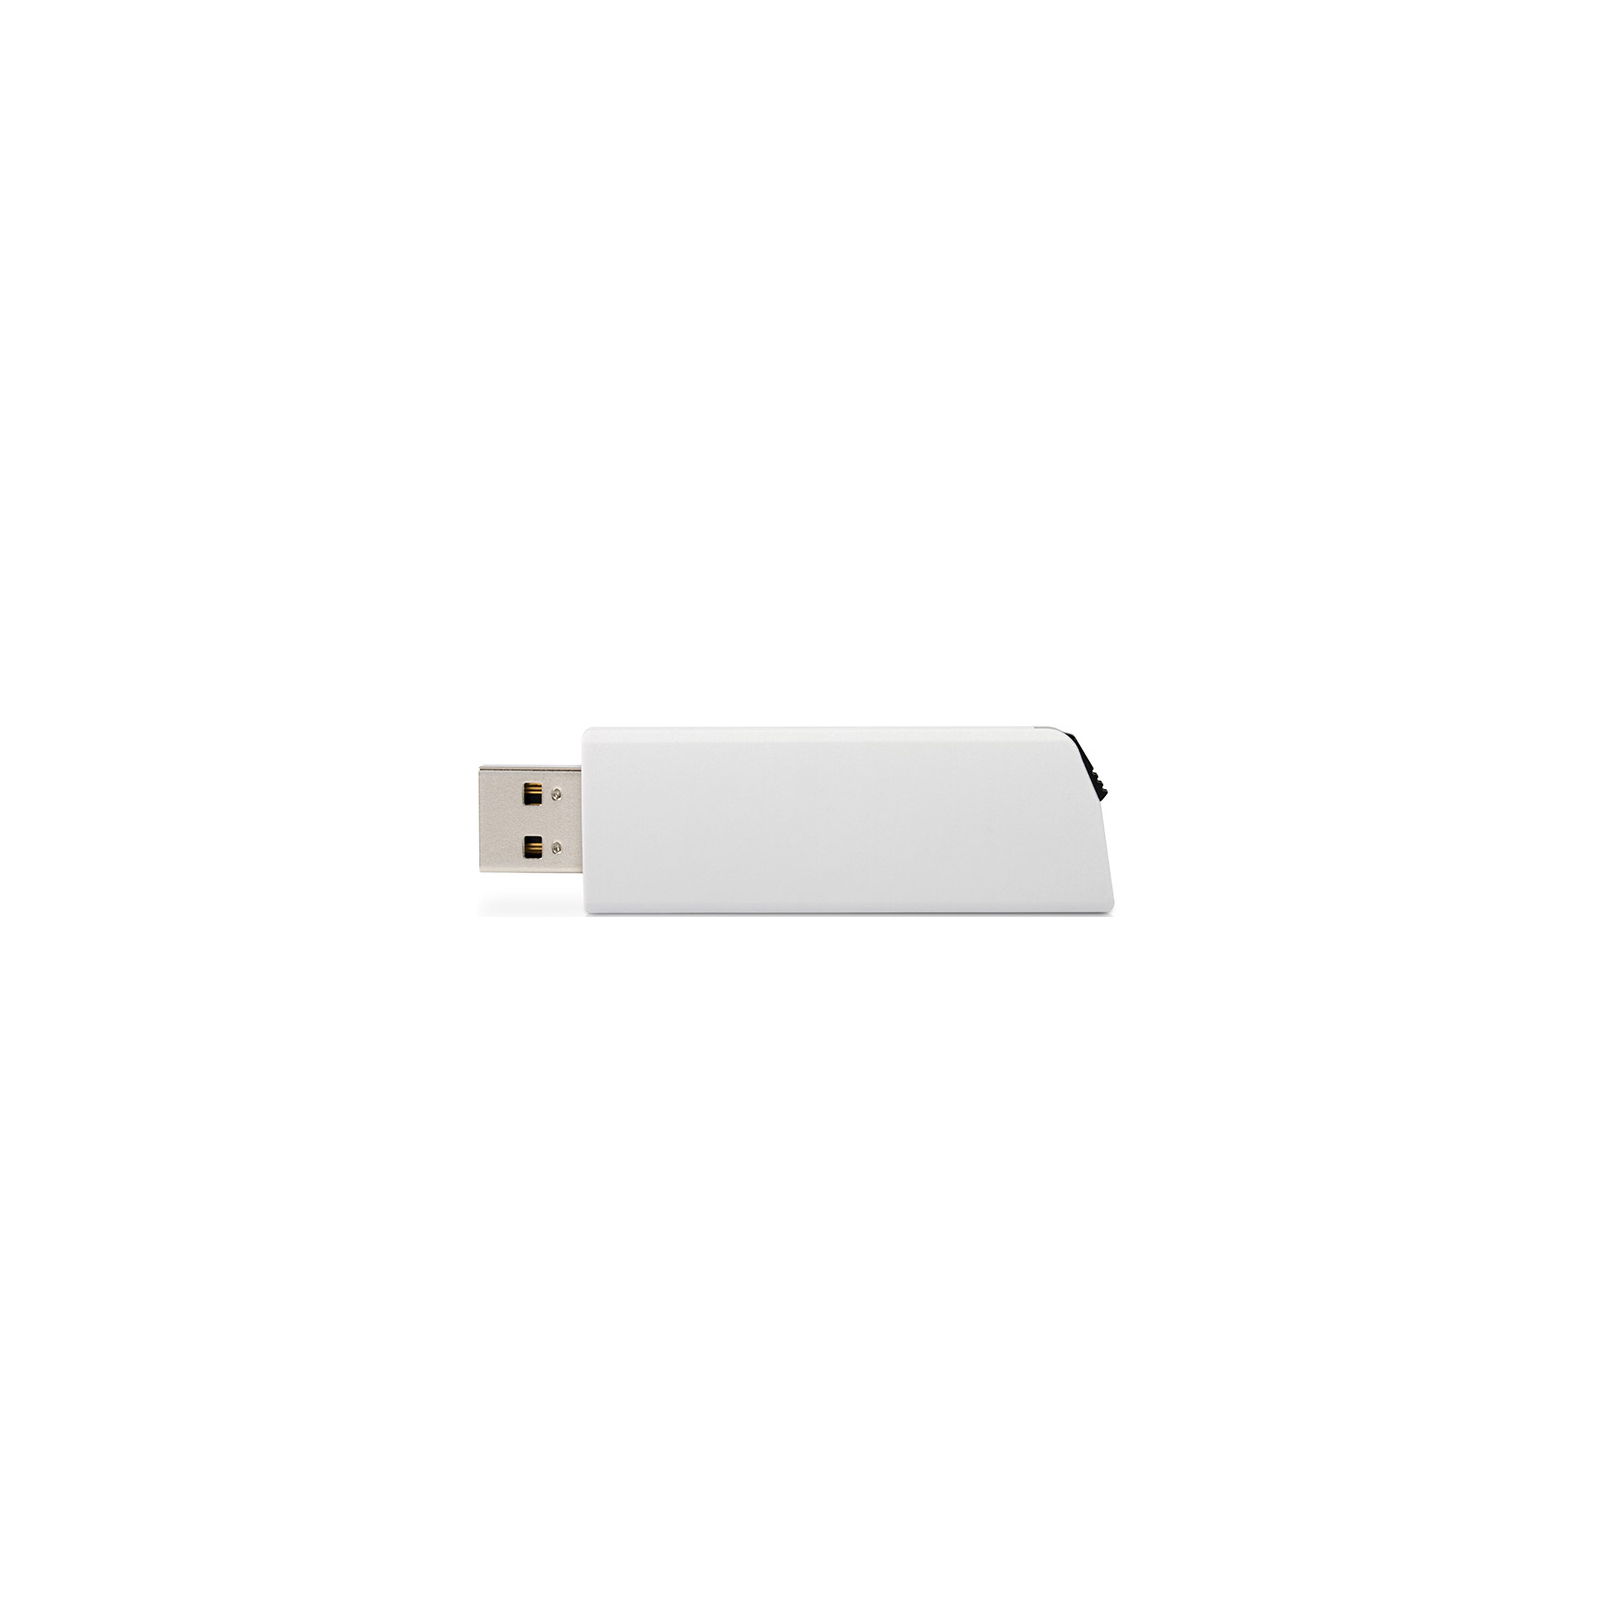 USB флеш накопитель Goodram 8GB CL!CK White USB 2.0 (PD4GH2GRCLWB) изображение 5